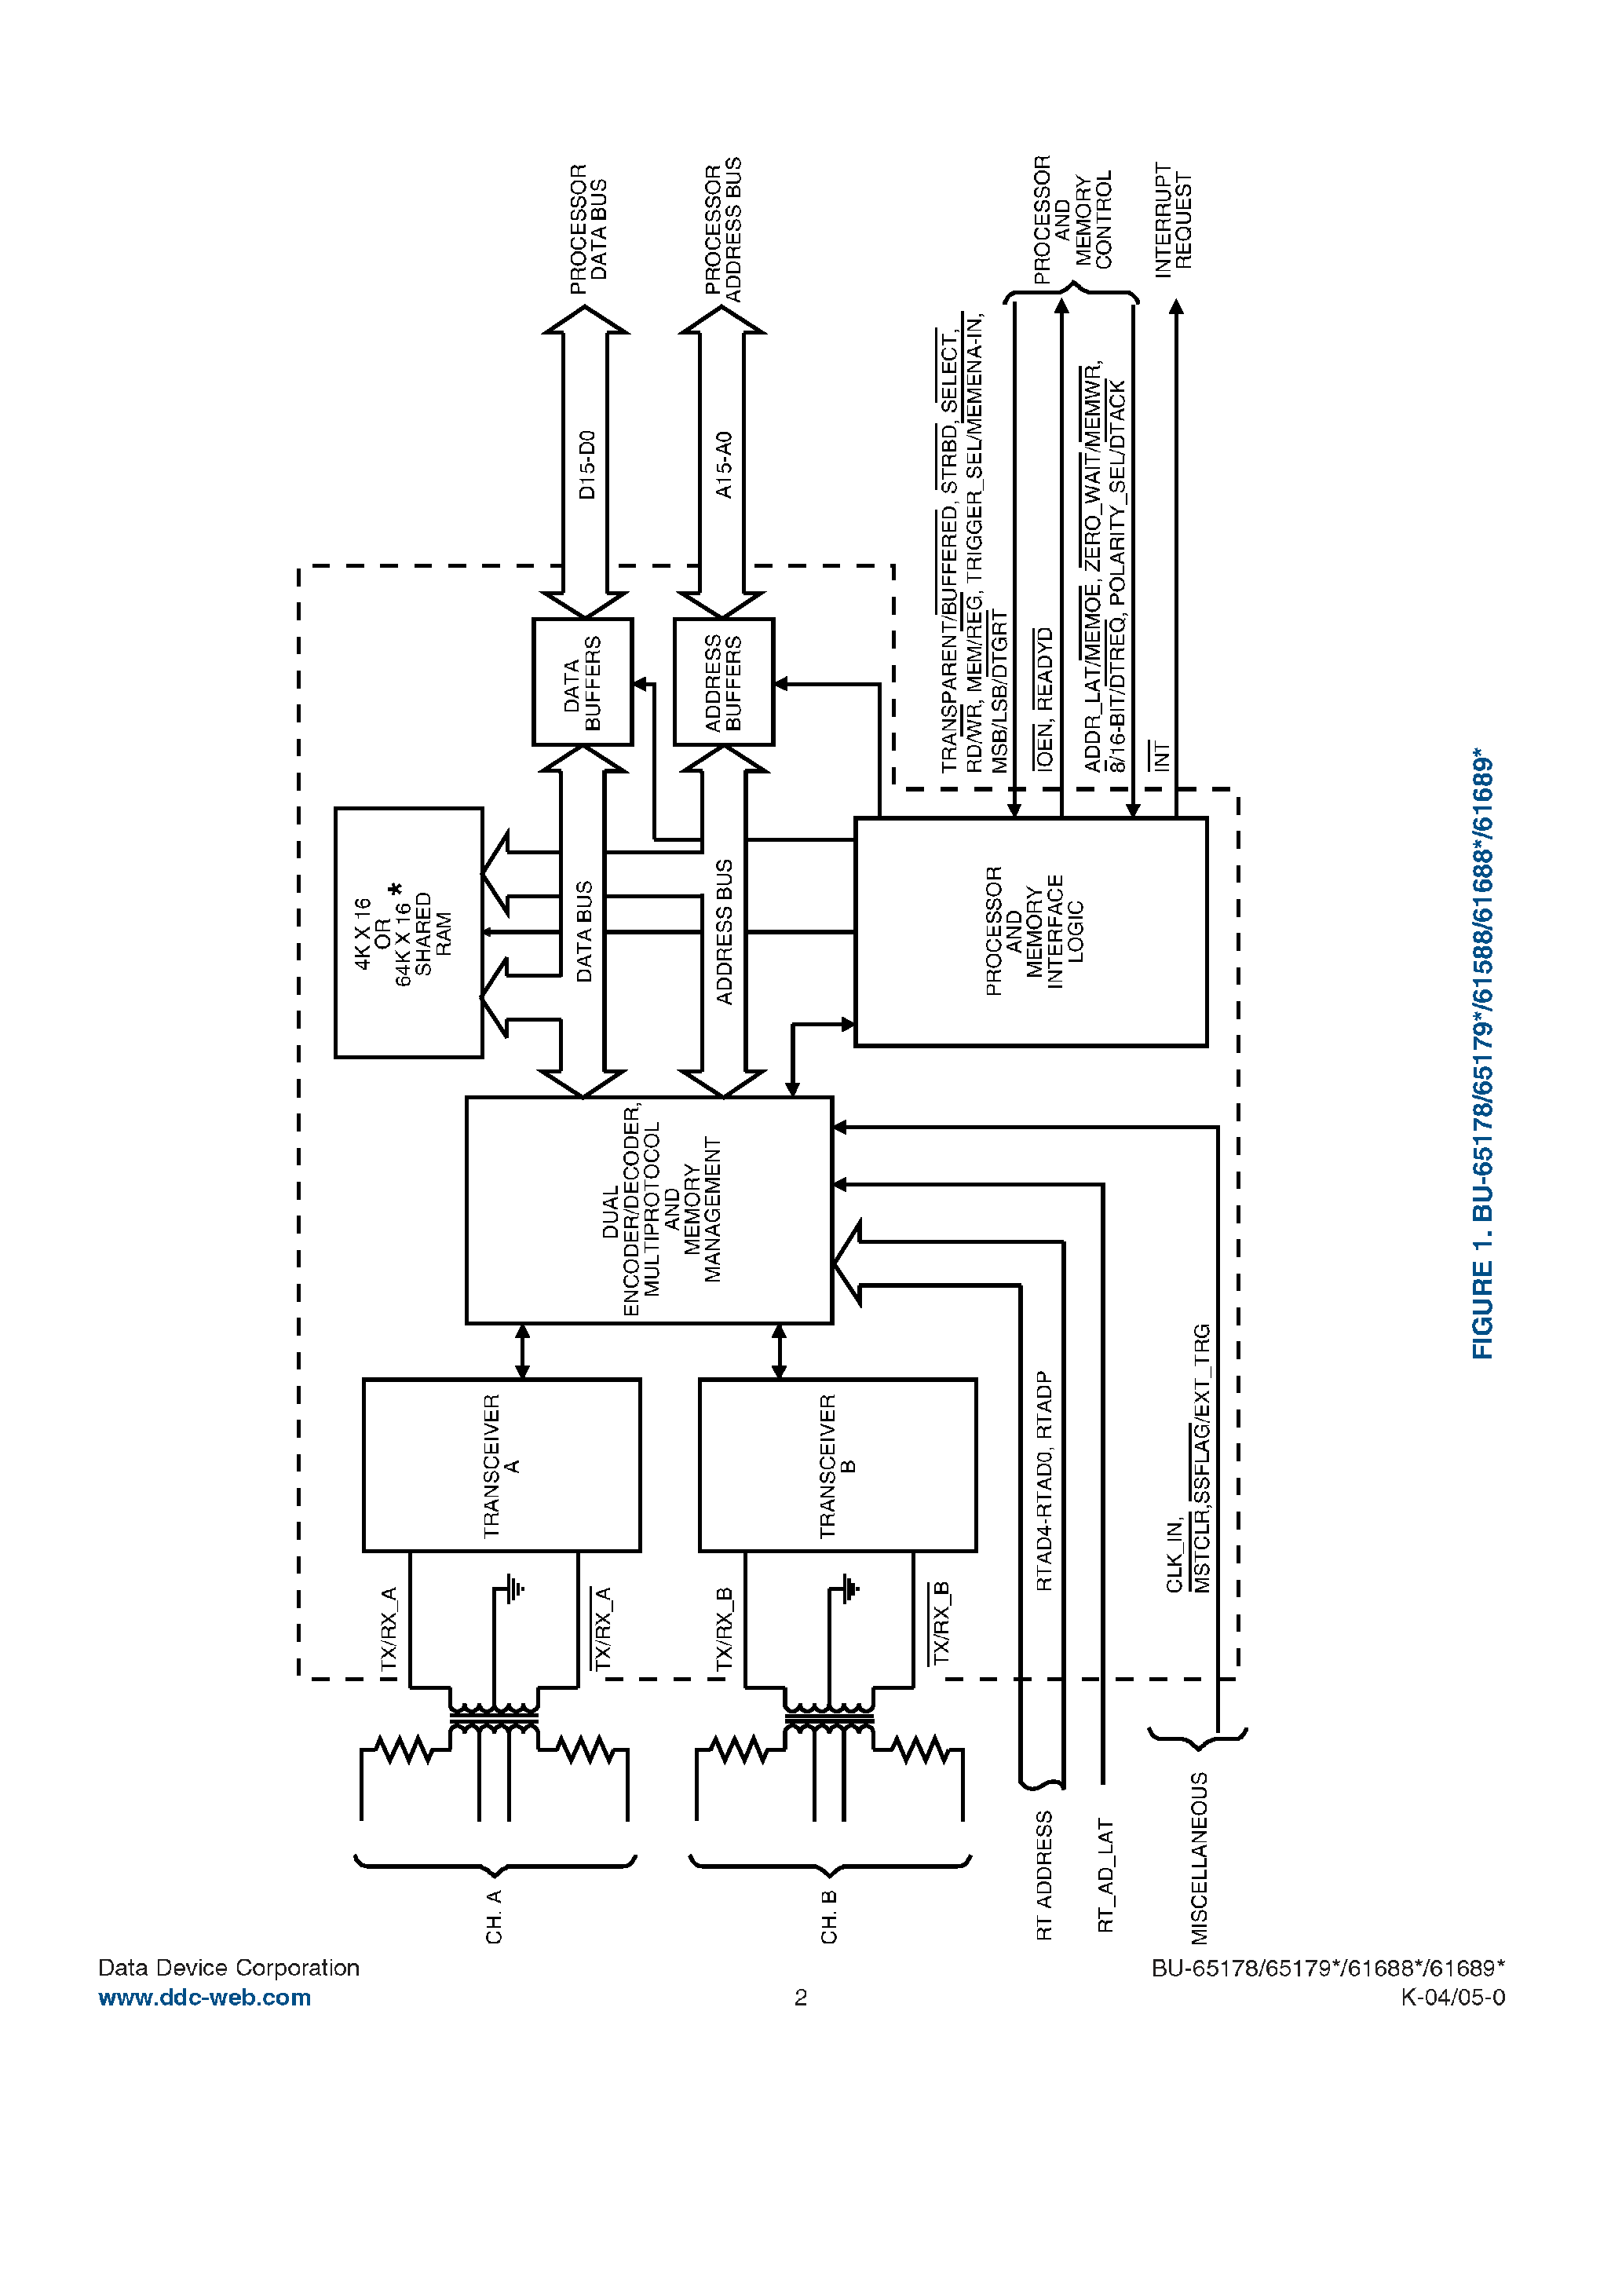 Datasheet BU-65179 - Miniature Advanced Communication Engine and Mini-Ace Plus page 2